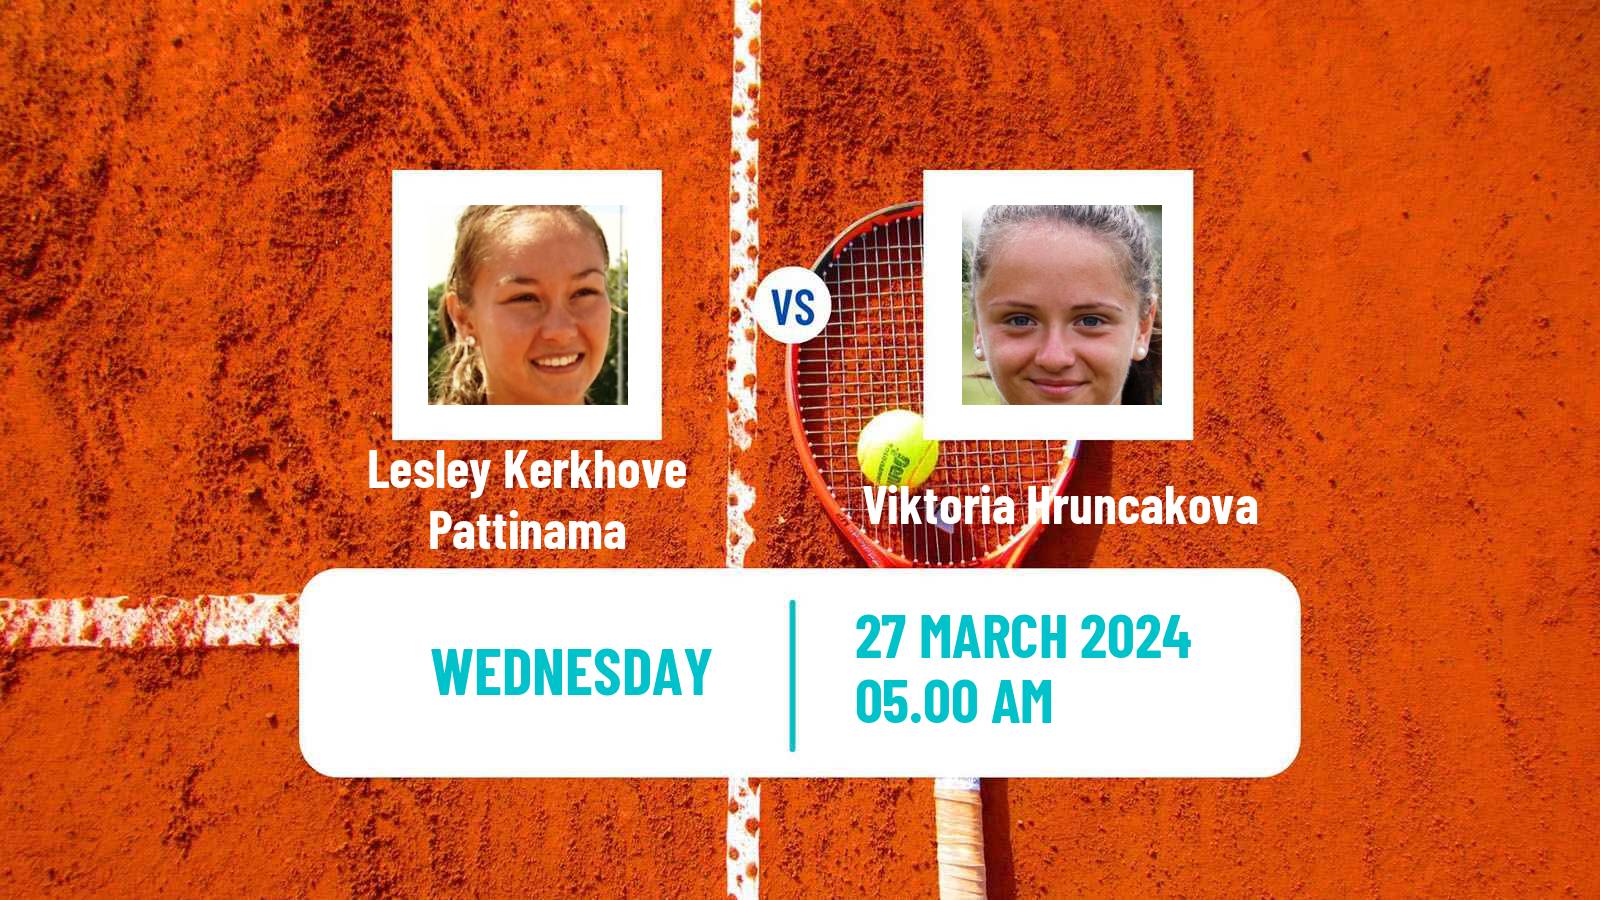 Tennis ITF W50 Murska Sobota Women Lesley Kerkhove Pattinama - Viktoria Hruncakova